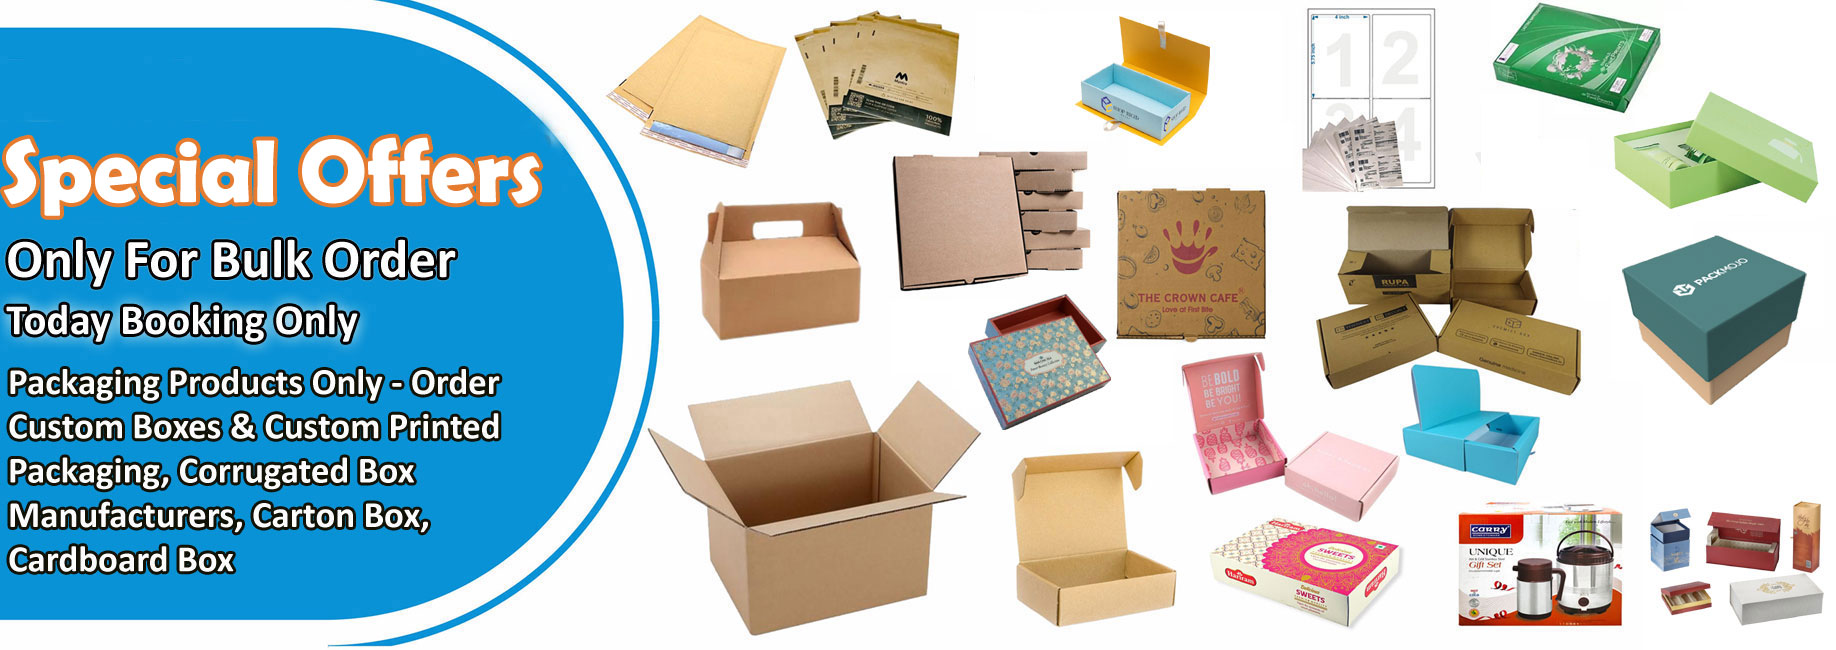 Gift Box at Latest Price in Delhi - Manufacturer & Supplier